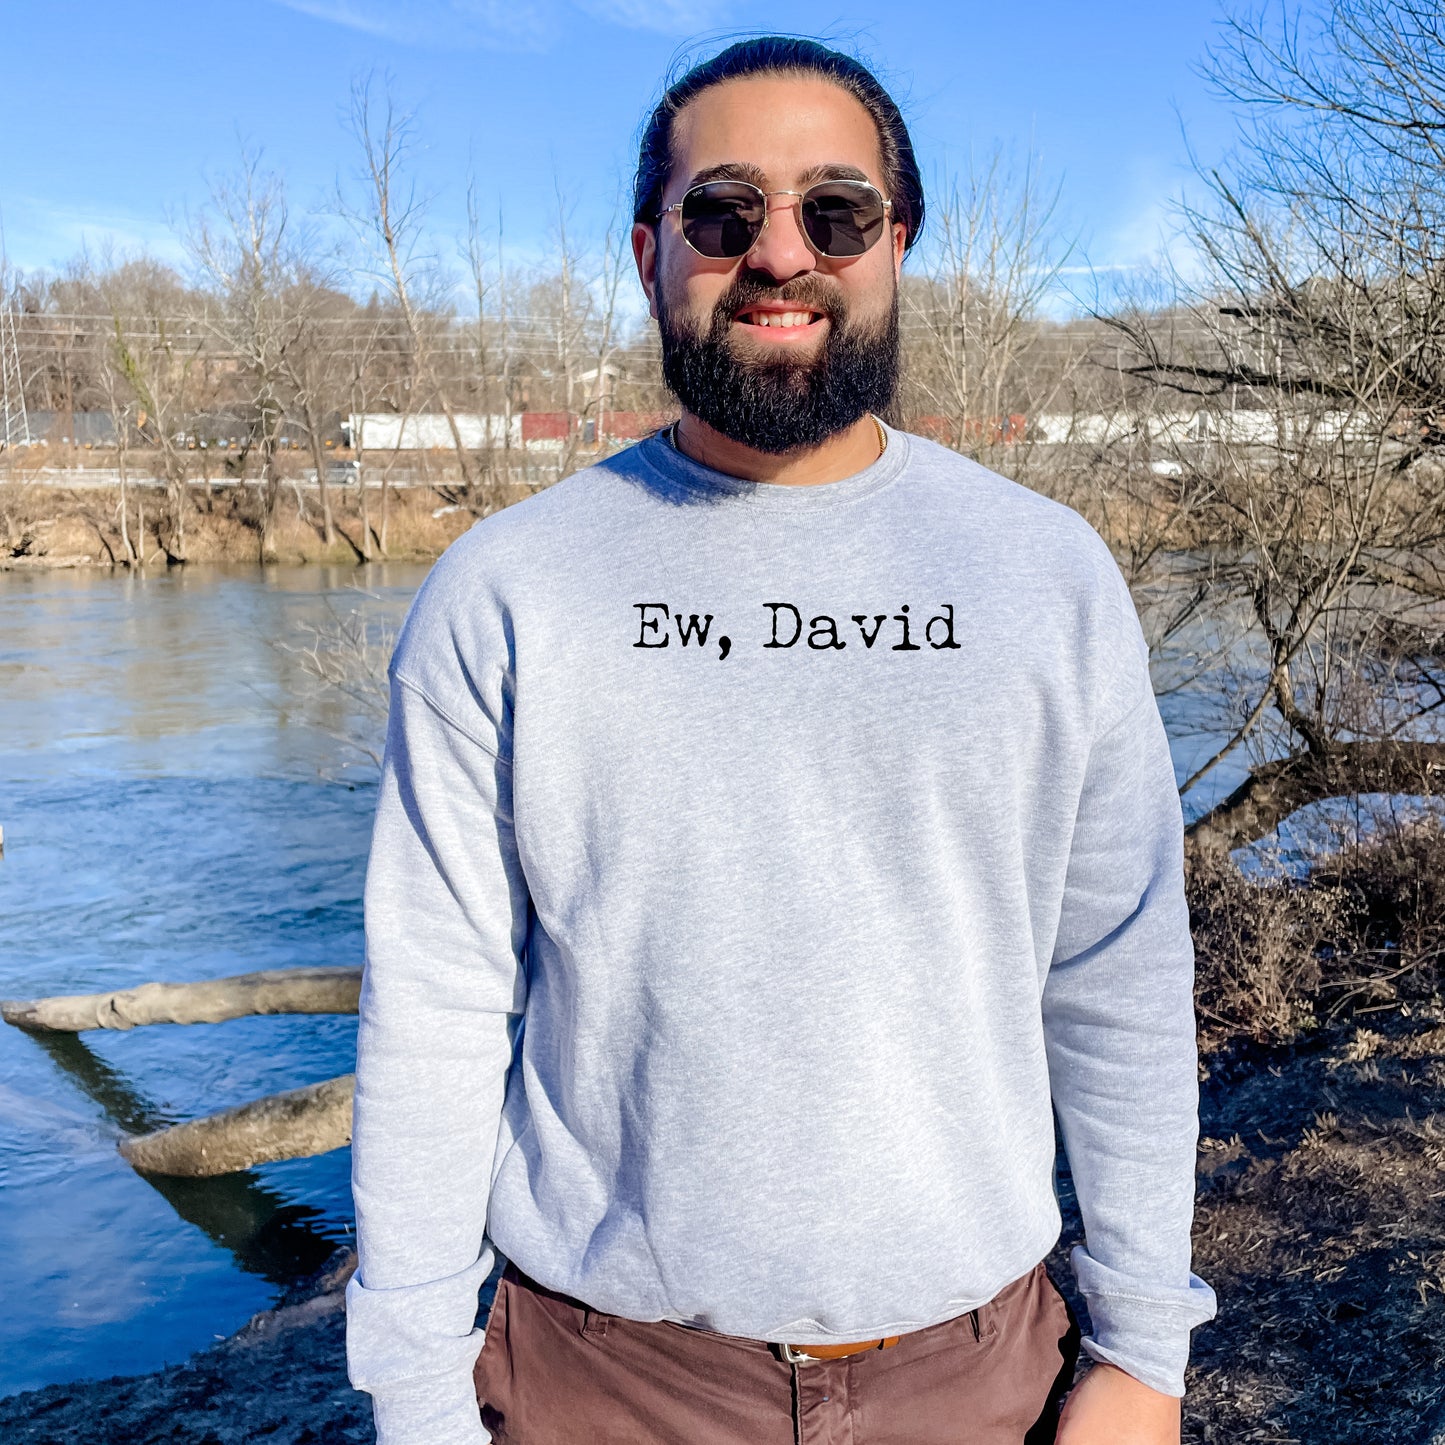 Ew, David (Schitt's Creek) - Unisex Sweatshirt - Heather Gray or Dusty Blue